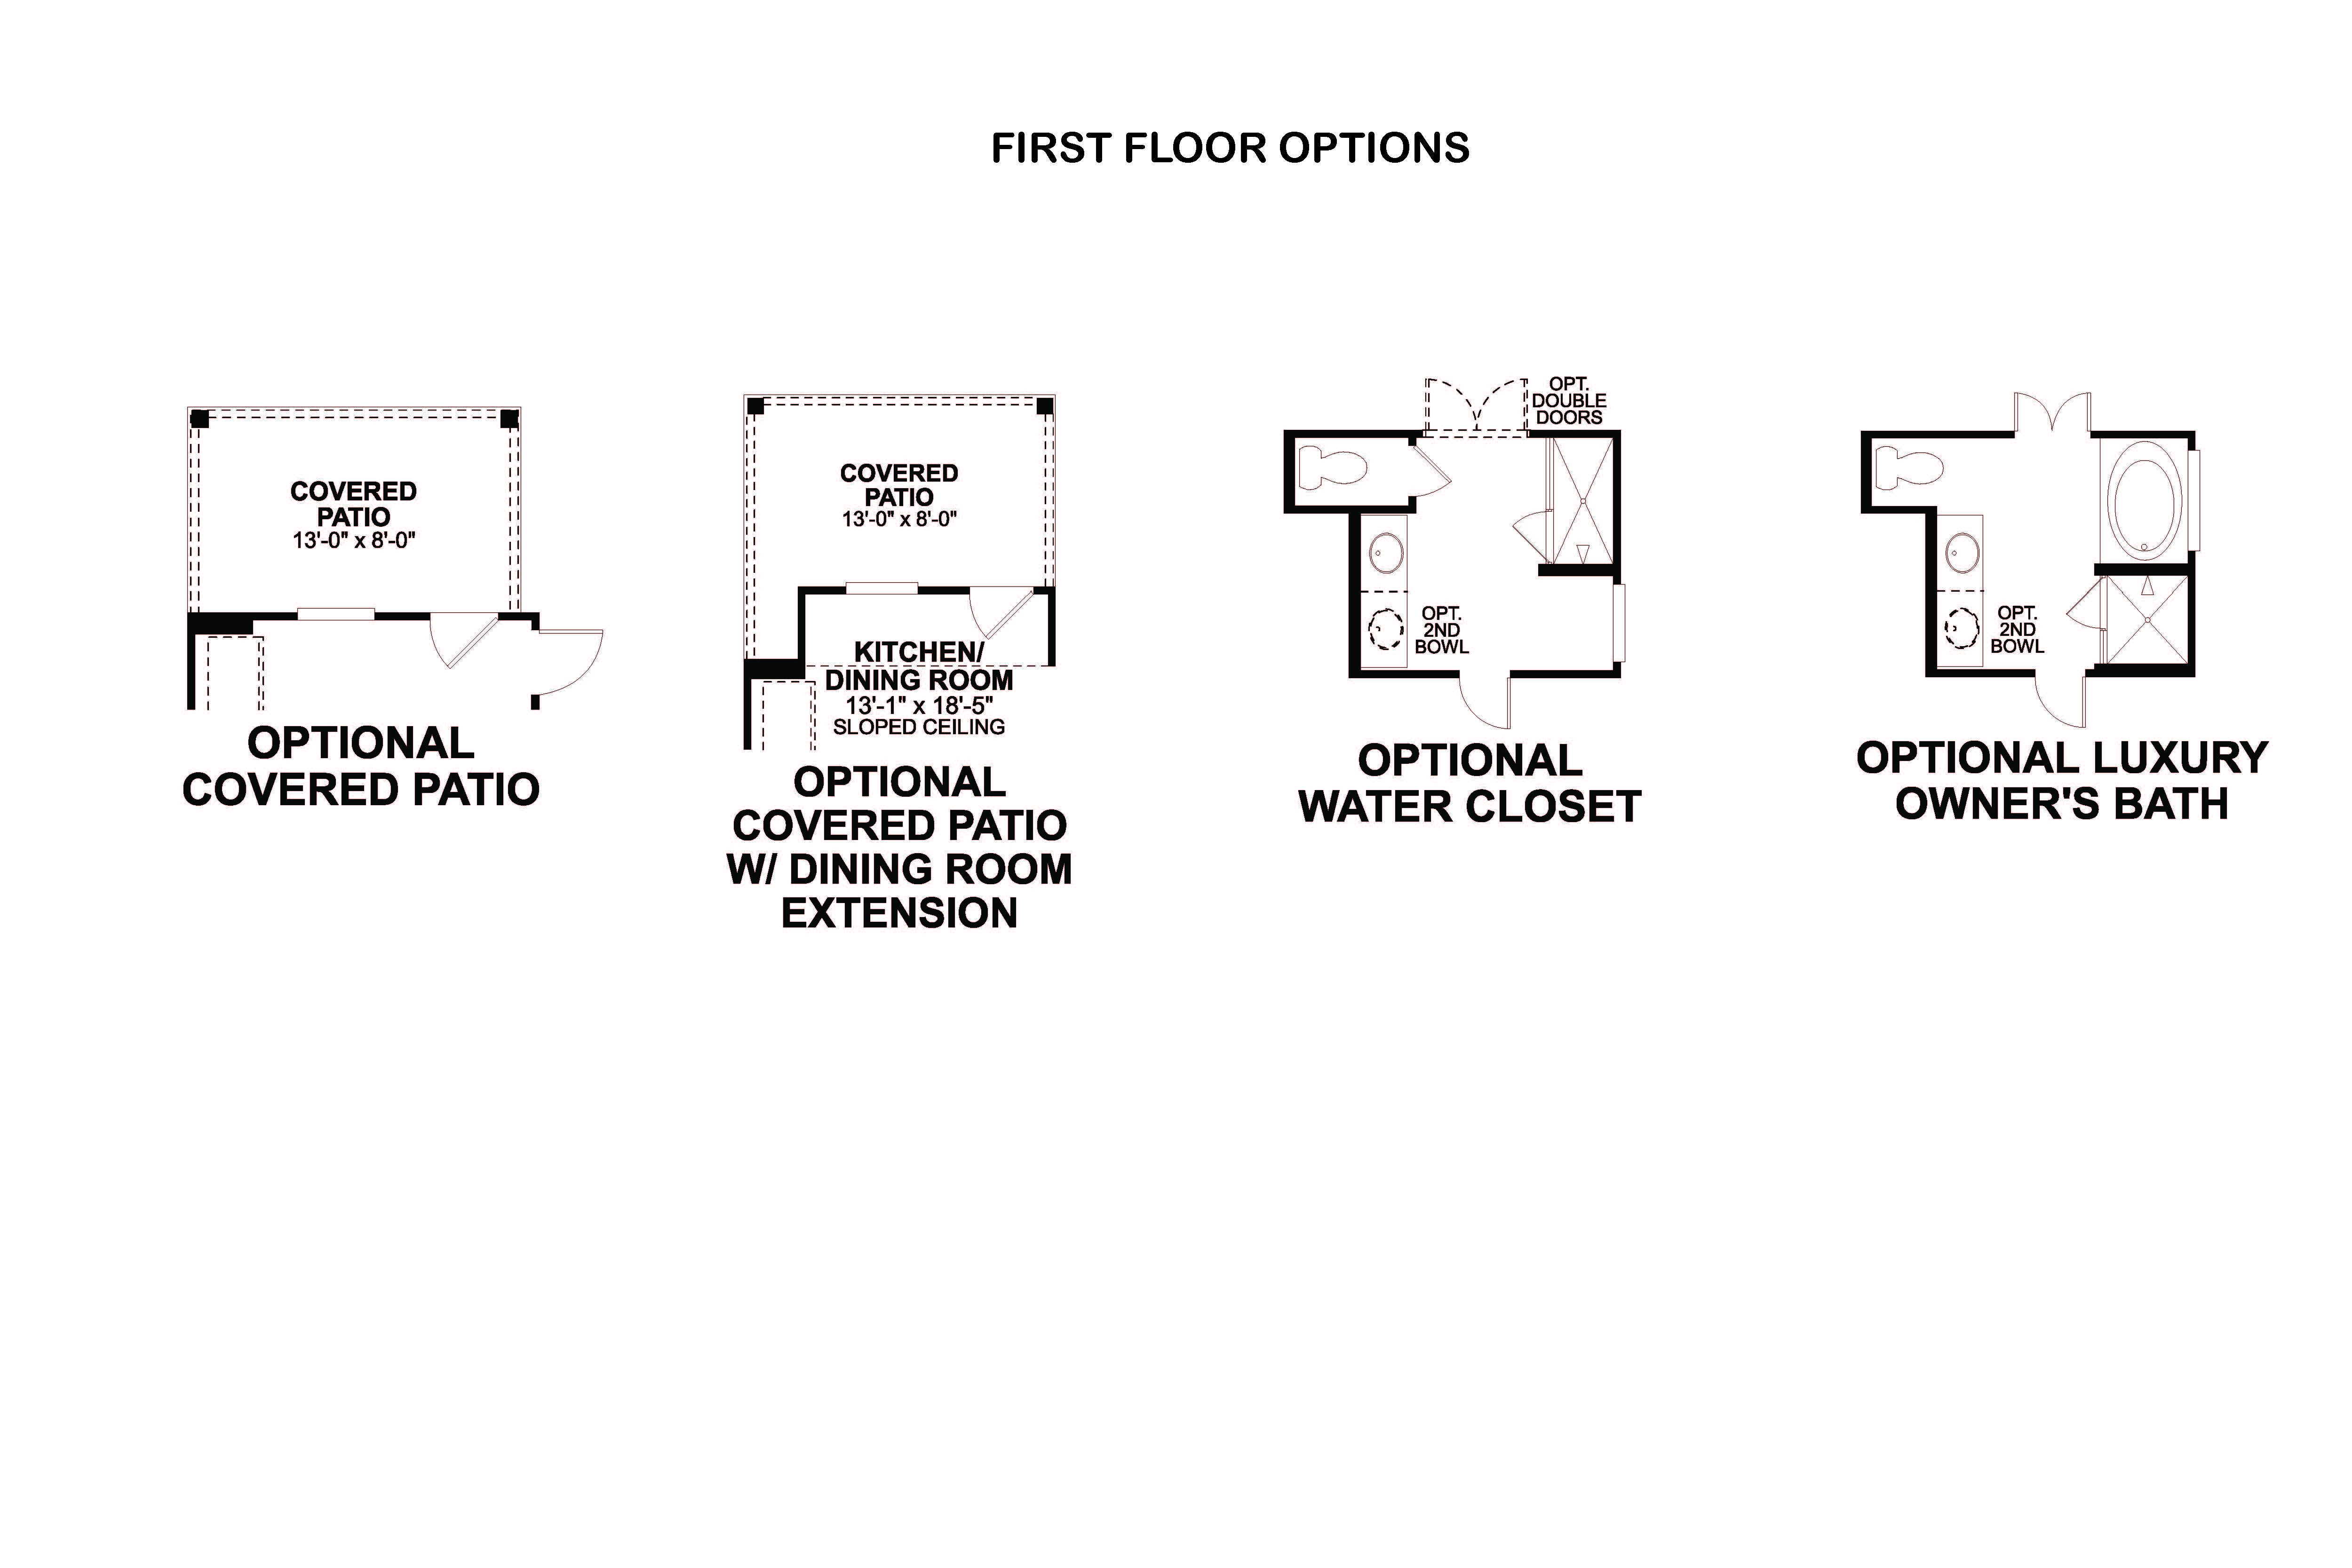 Larkspur first floor options